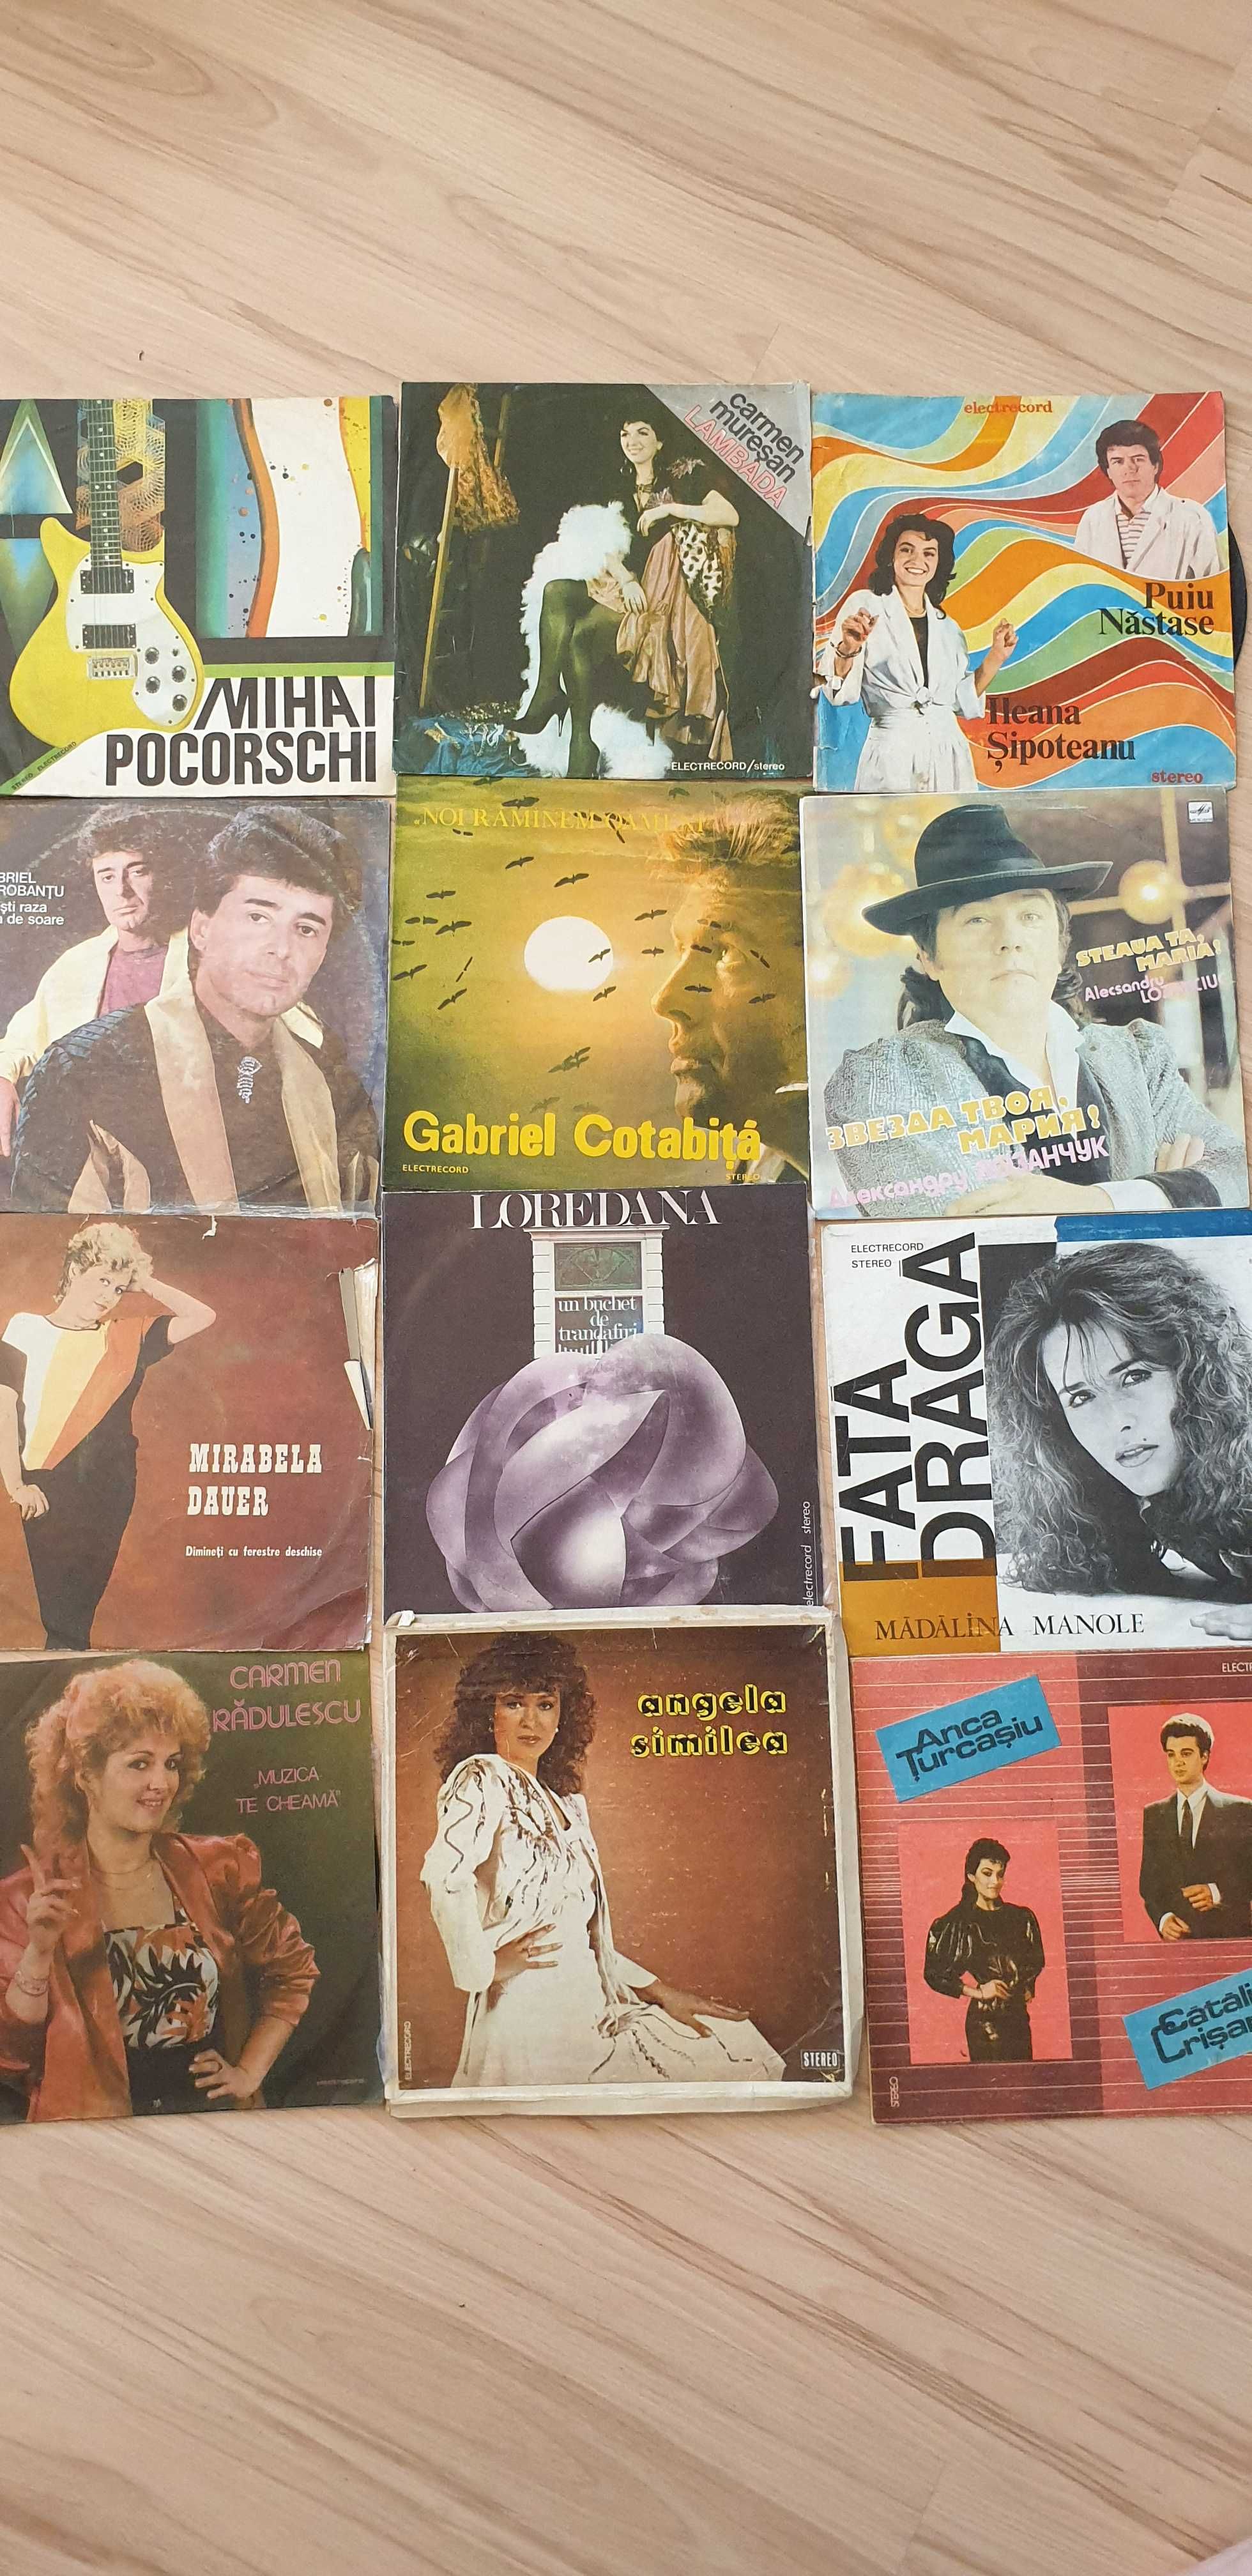 Colectie vinyl muzica veche, romaneasca si straina